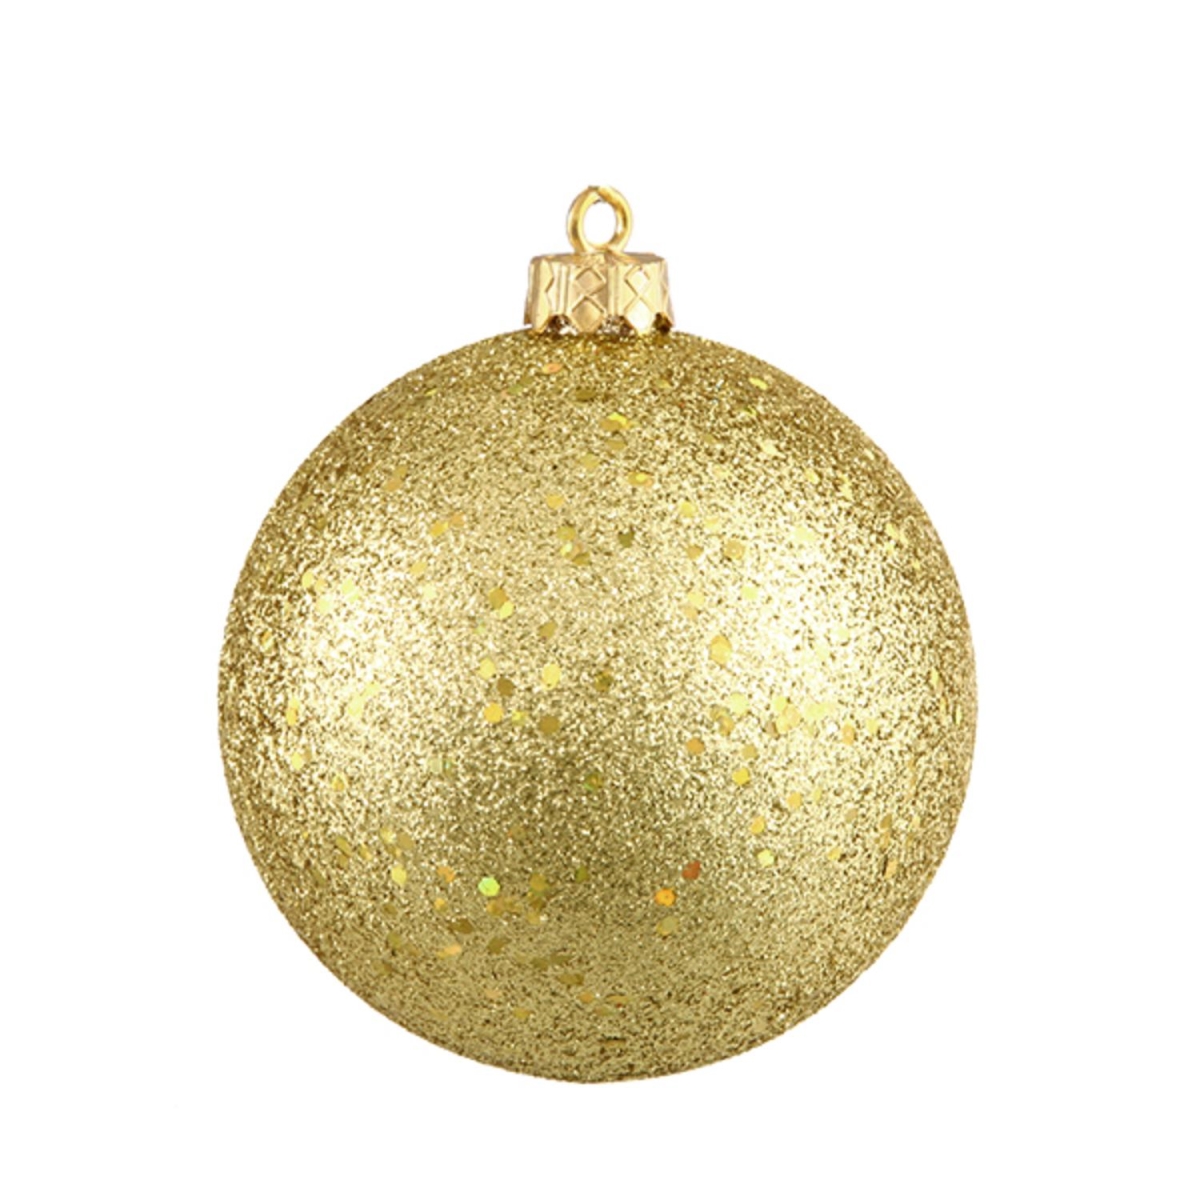 Northlight 32280553 4 in. Shatterproof Christmas Ball Ornament, Vegas Gold & Holographic Glitter